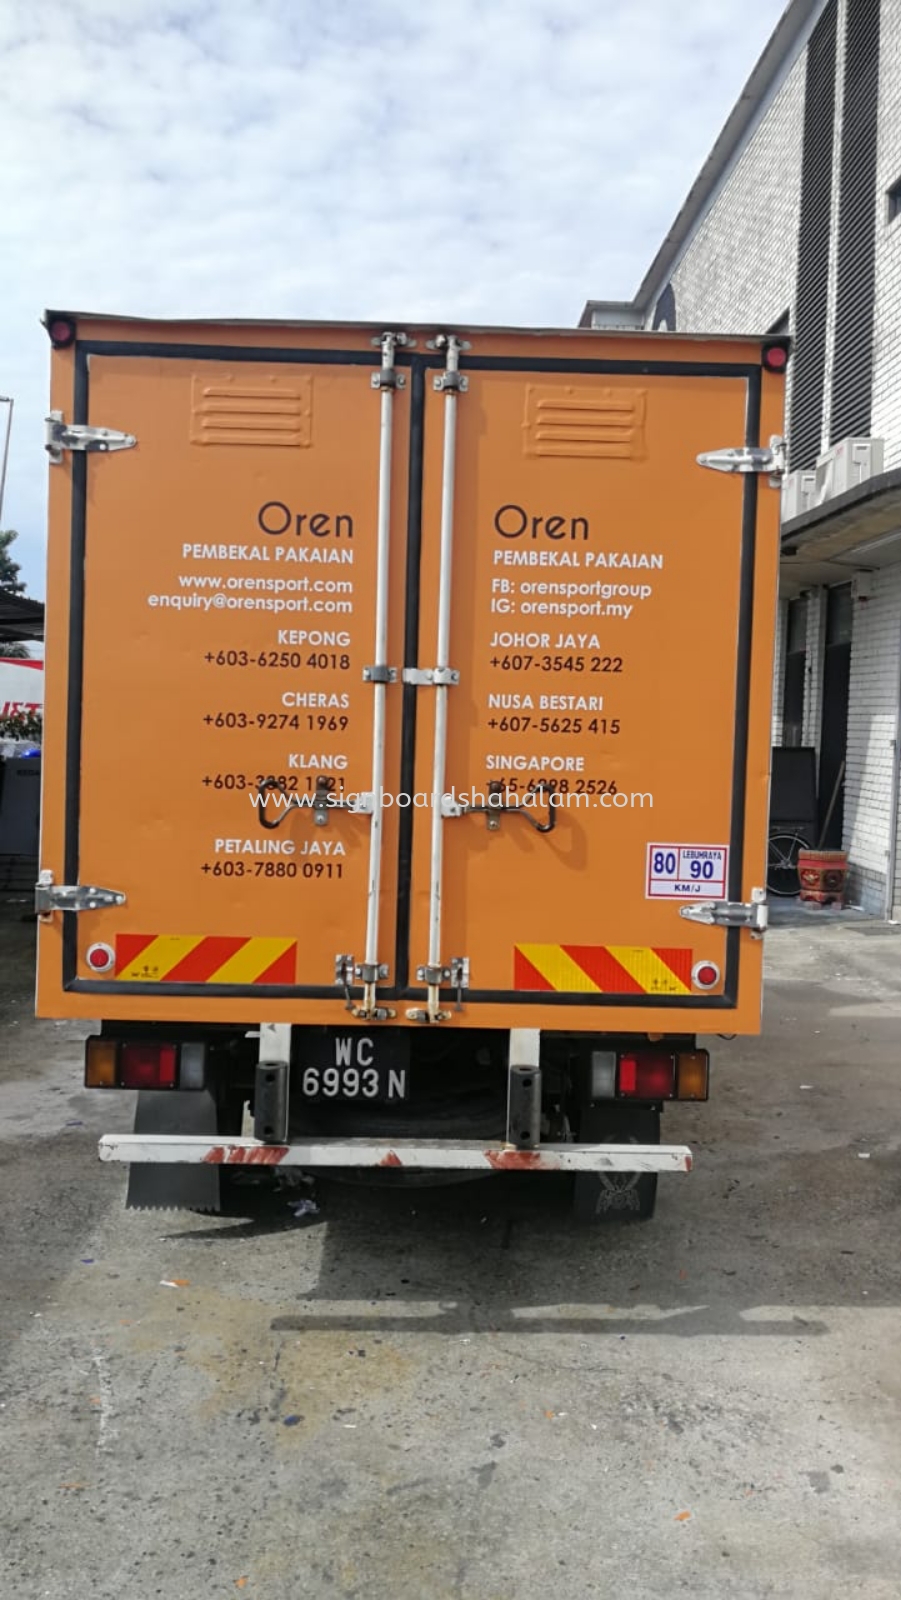 Oren Sports Klang - Truck Lorry Sticker 